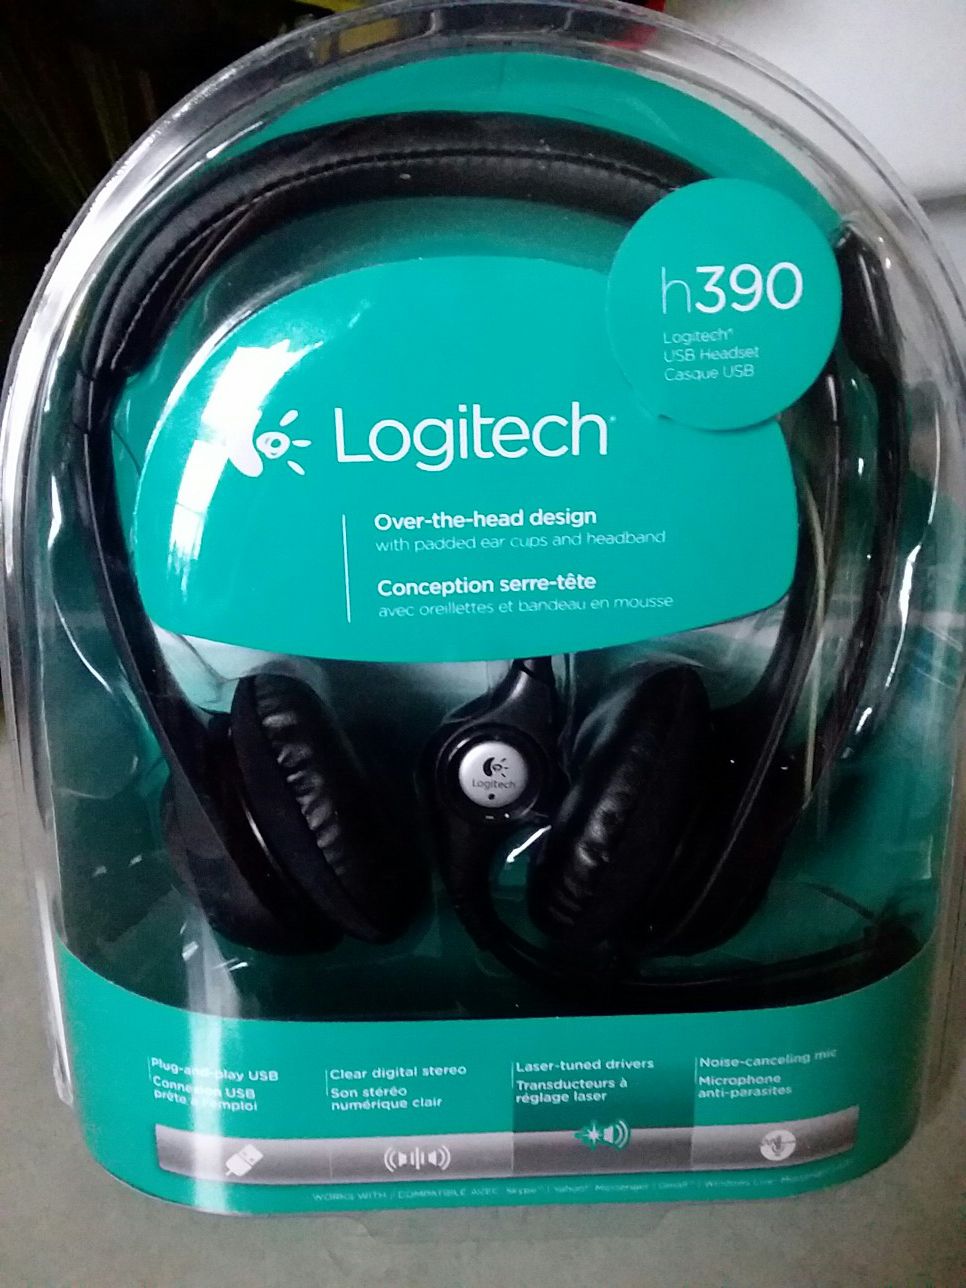 Brand new Logitech USB headset